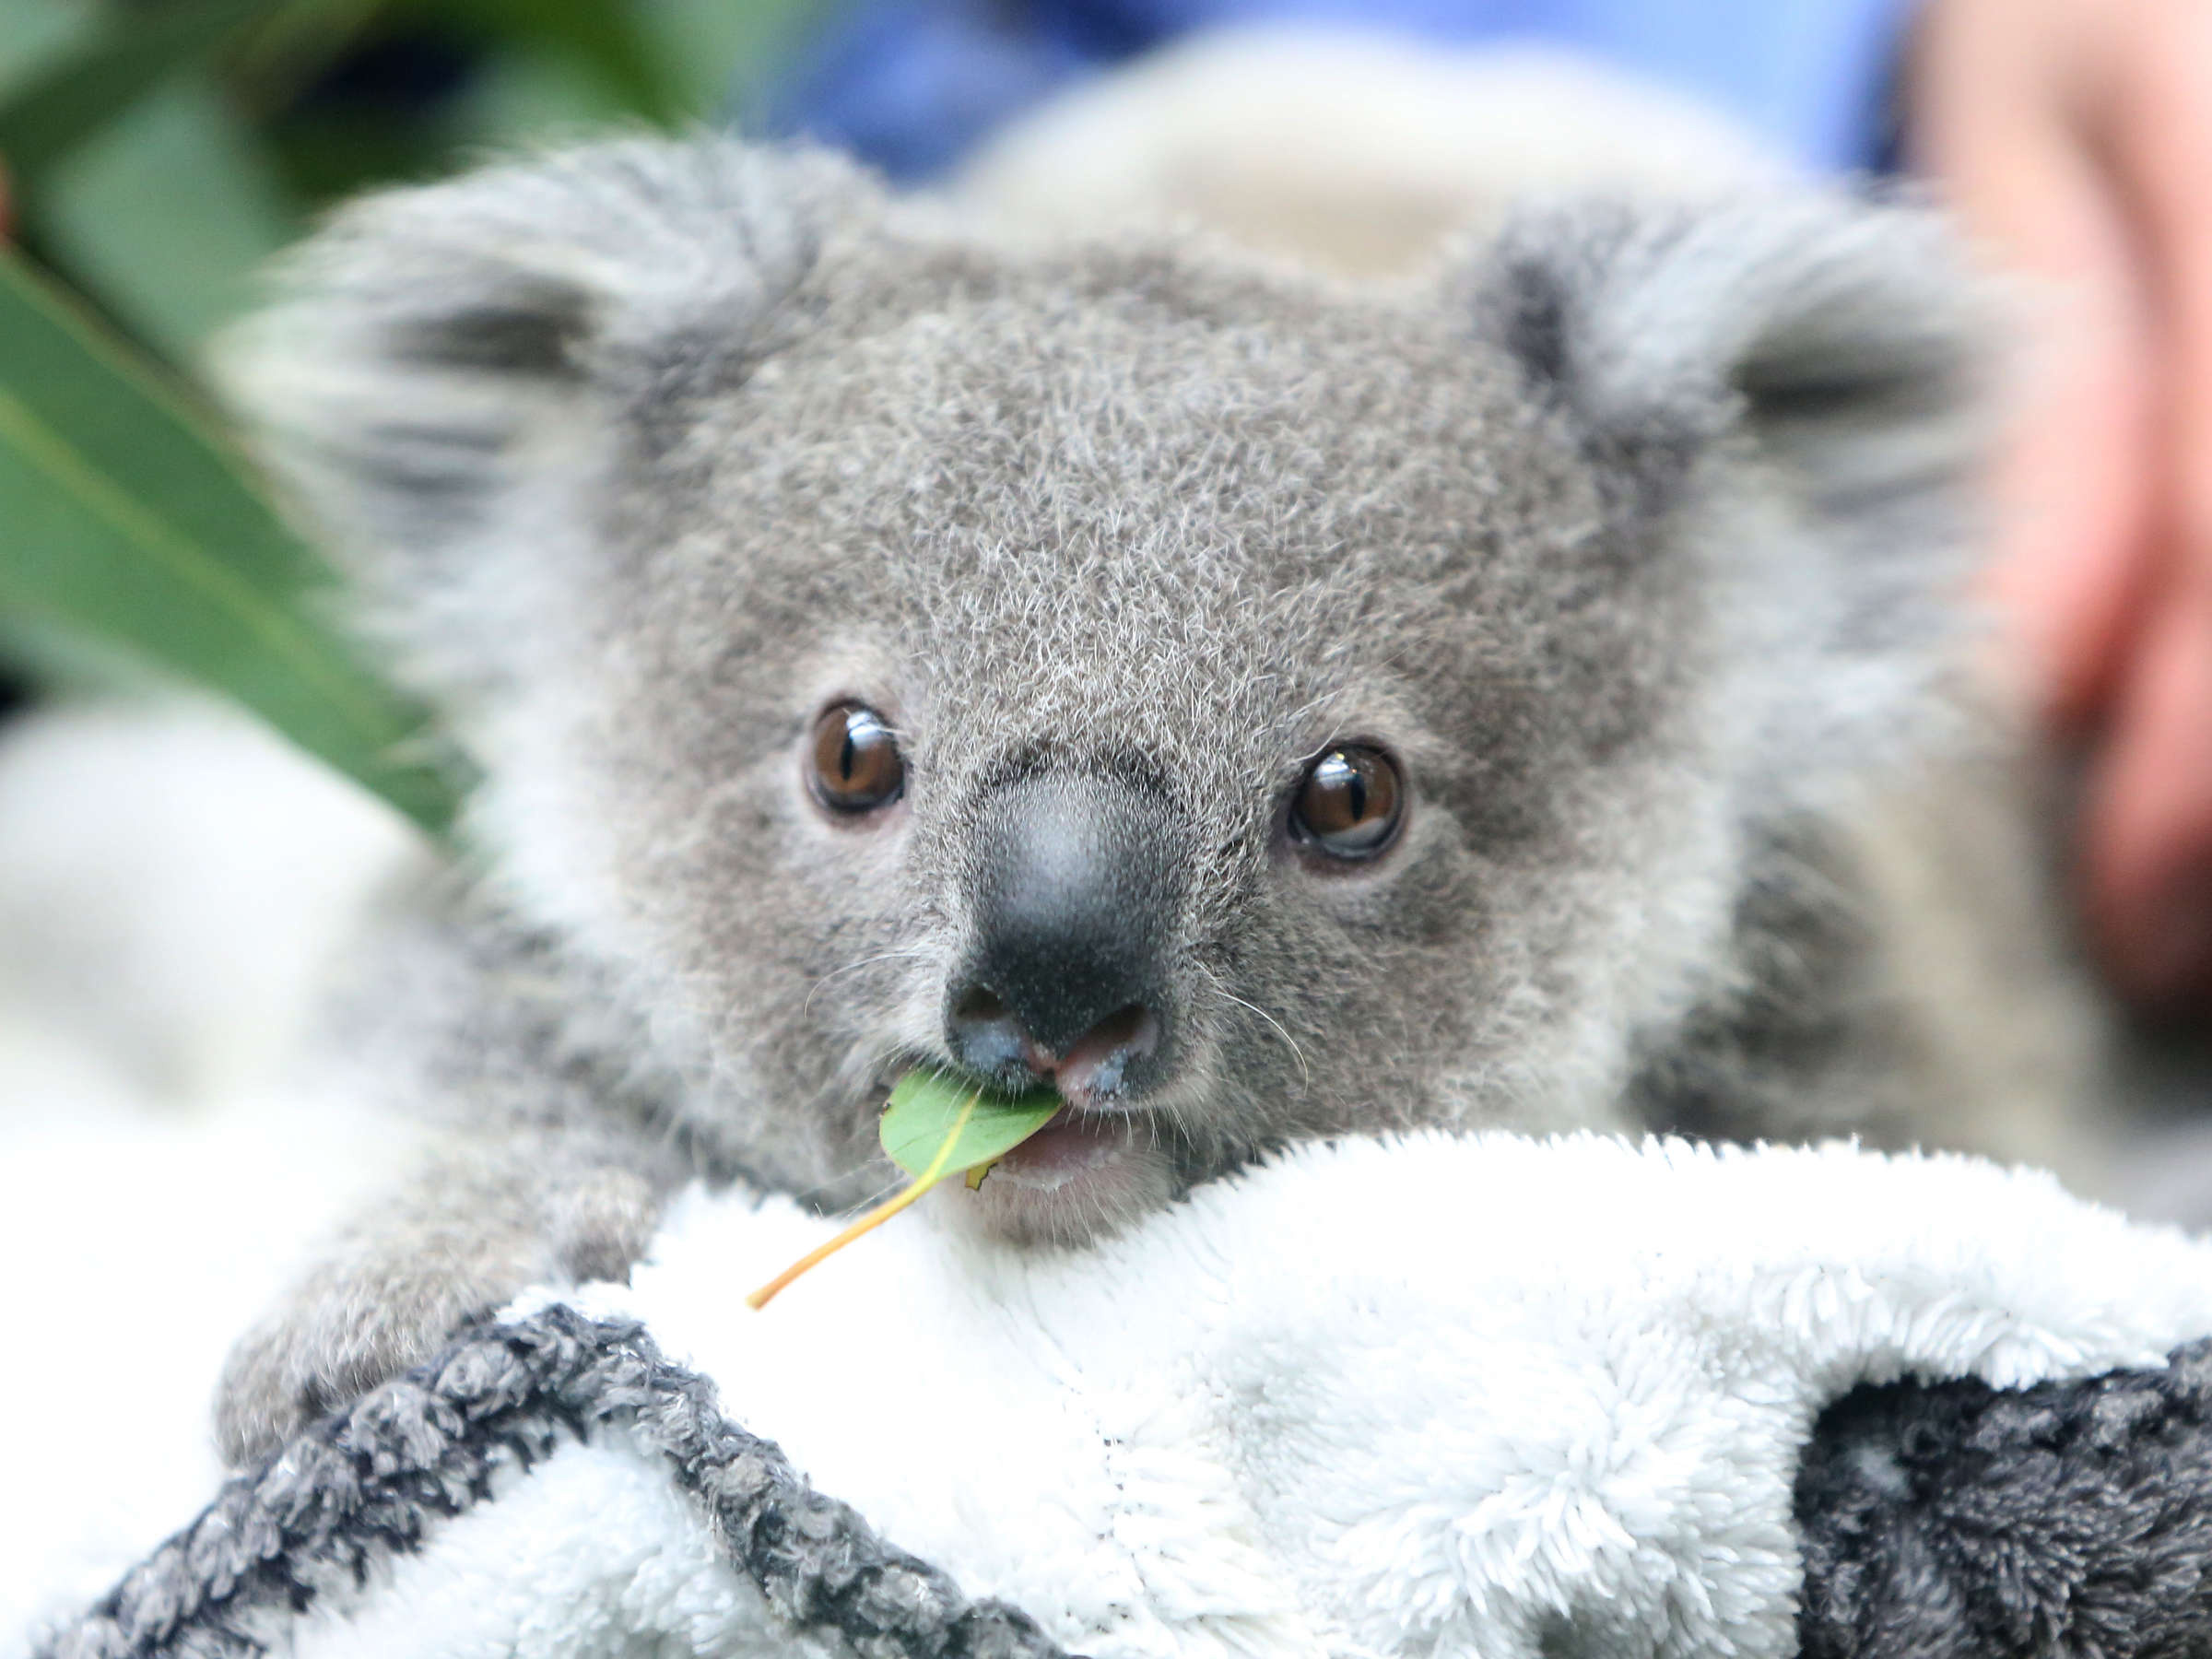 Adorable baby koalas, First peek from pouch, Fluffy little joeys, Mother's love, 2400x1800 HD Desktop